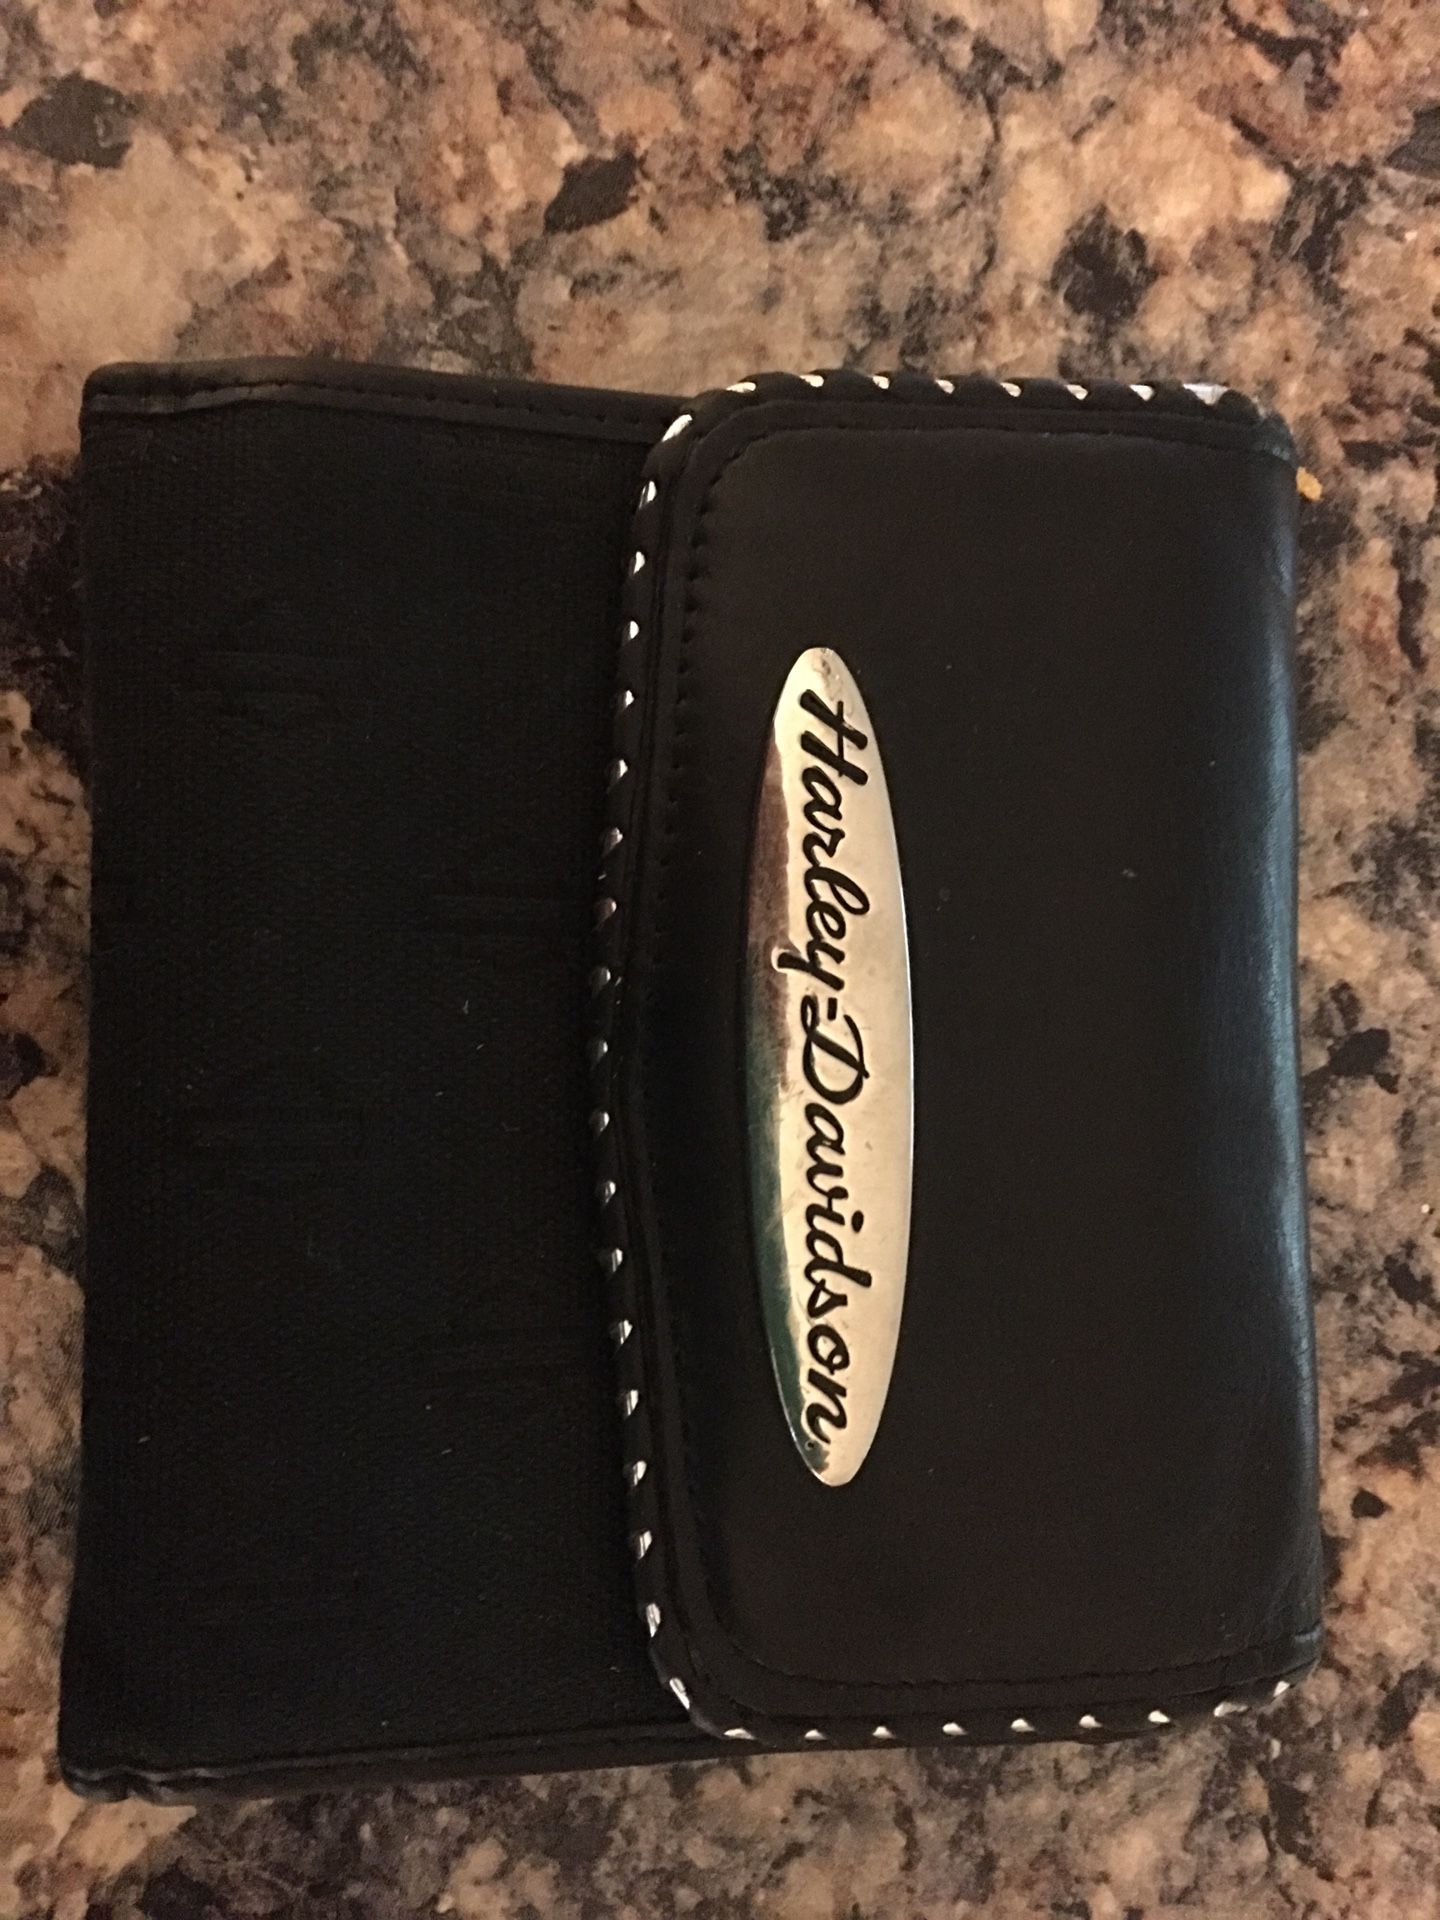 Harley Davidson all leather wallet